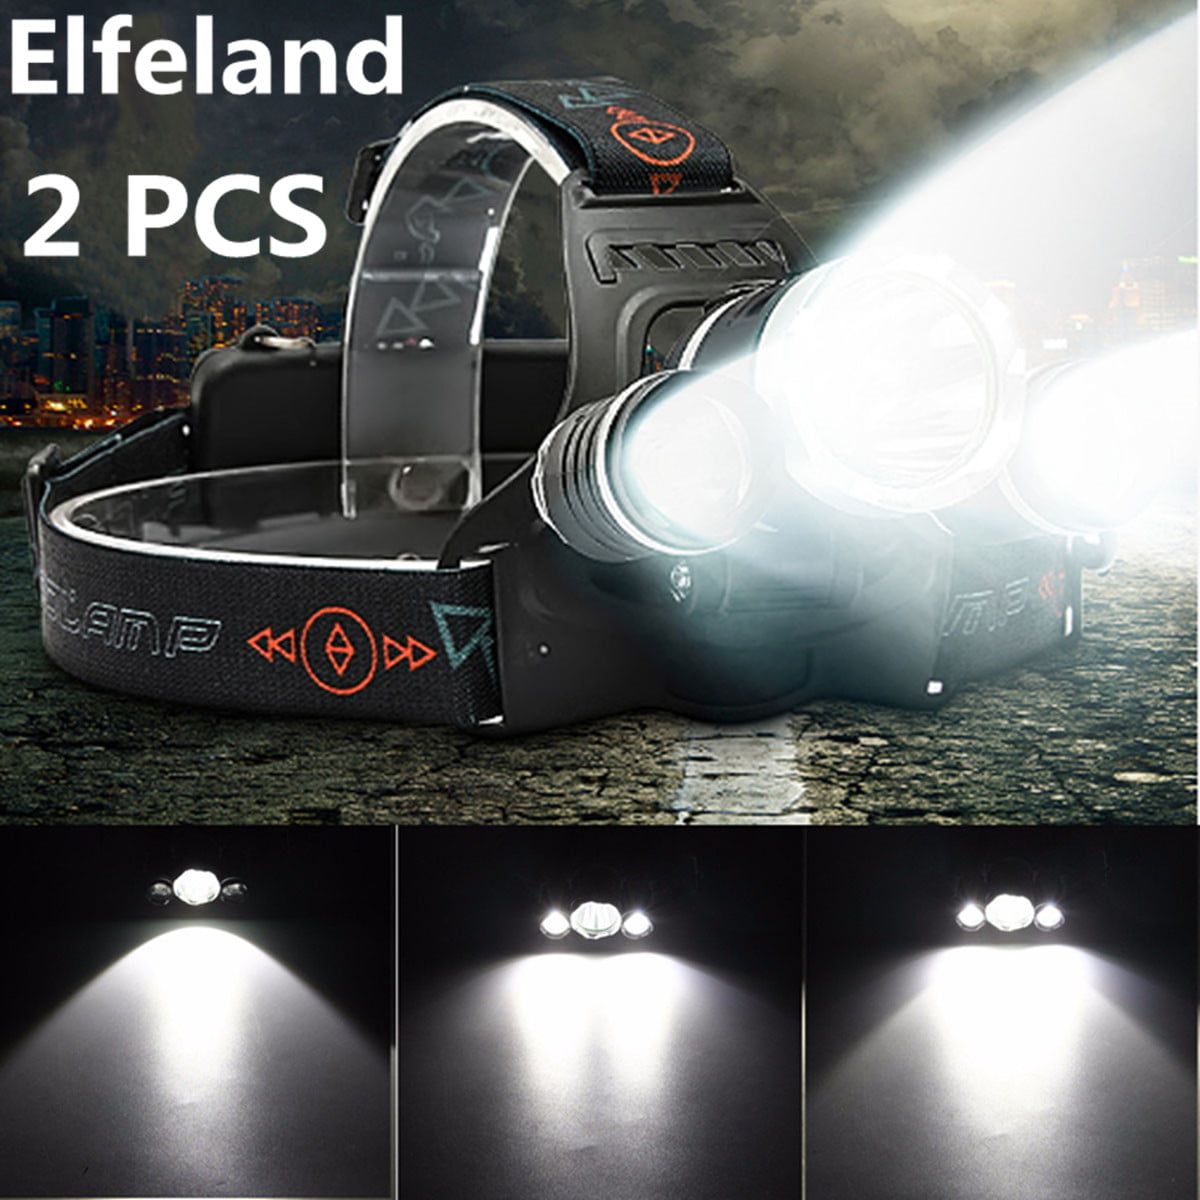 2-Pack 5000 Lm LED Headlight Headlamp Waterproof Flashlight Torch 3x T6 LED  Light For Hiking Camping Riding Fishing